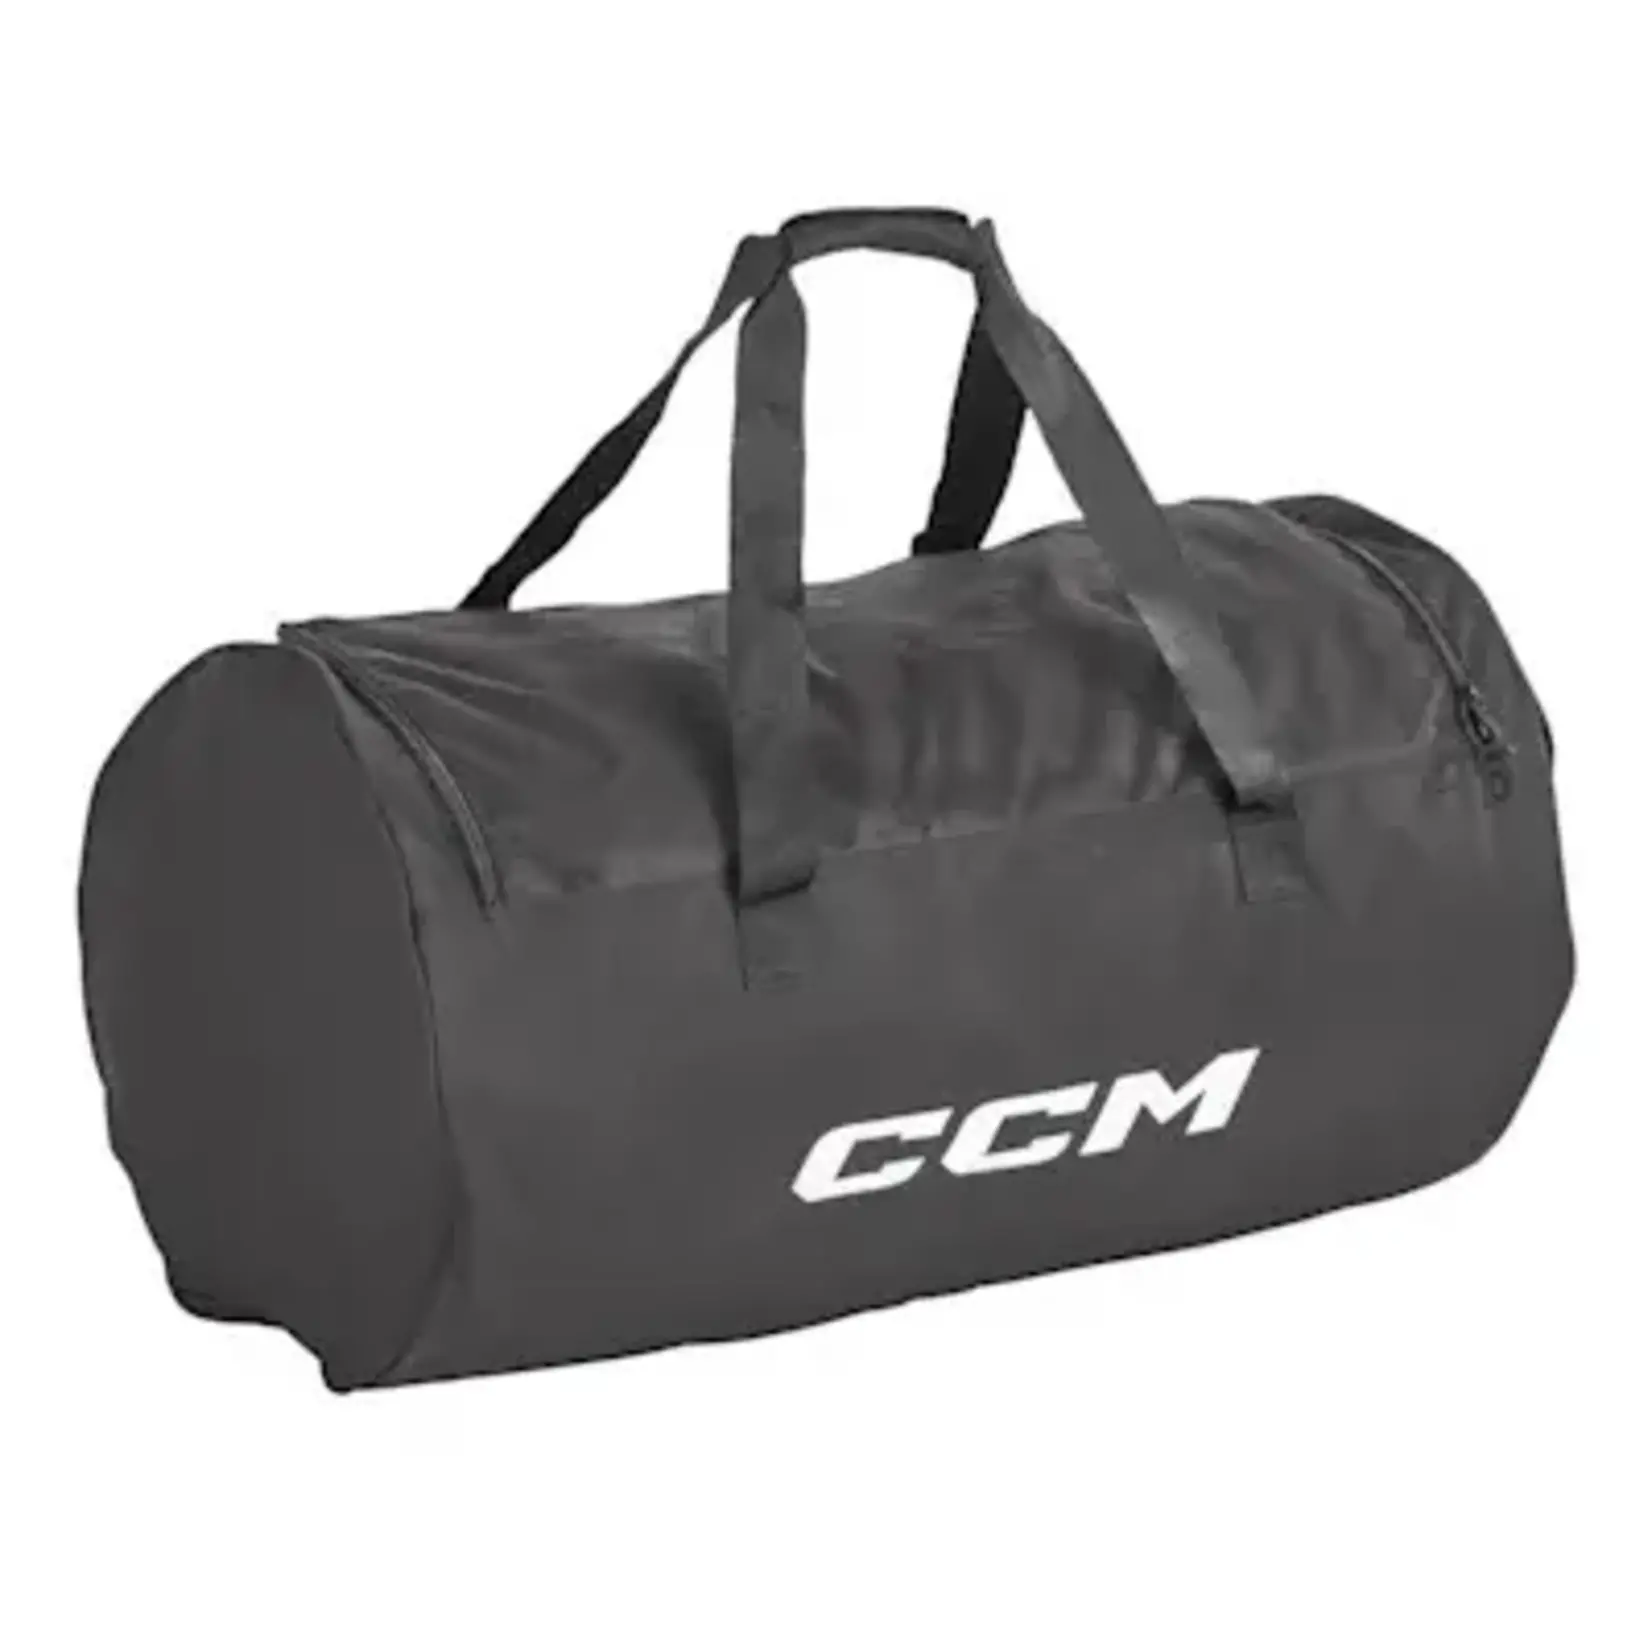 CCM CCM Hockey Bag, 410 Player Basic Carry, Senior, 36", Blk